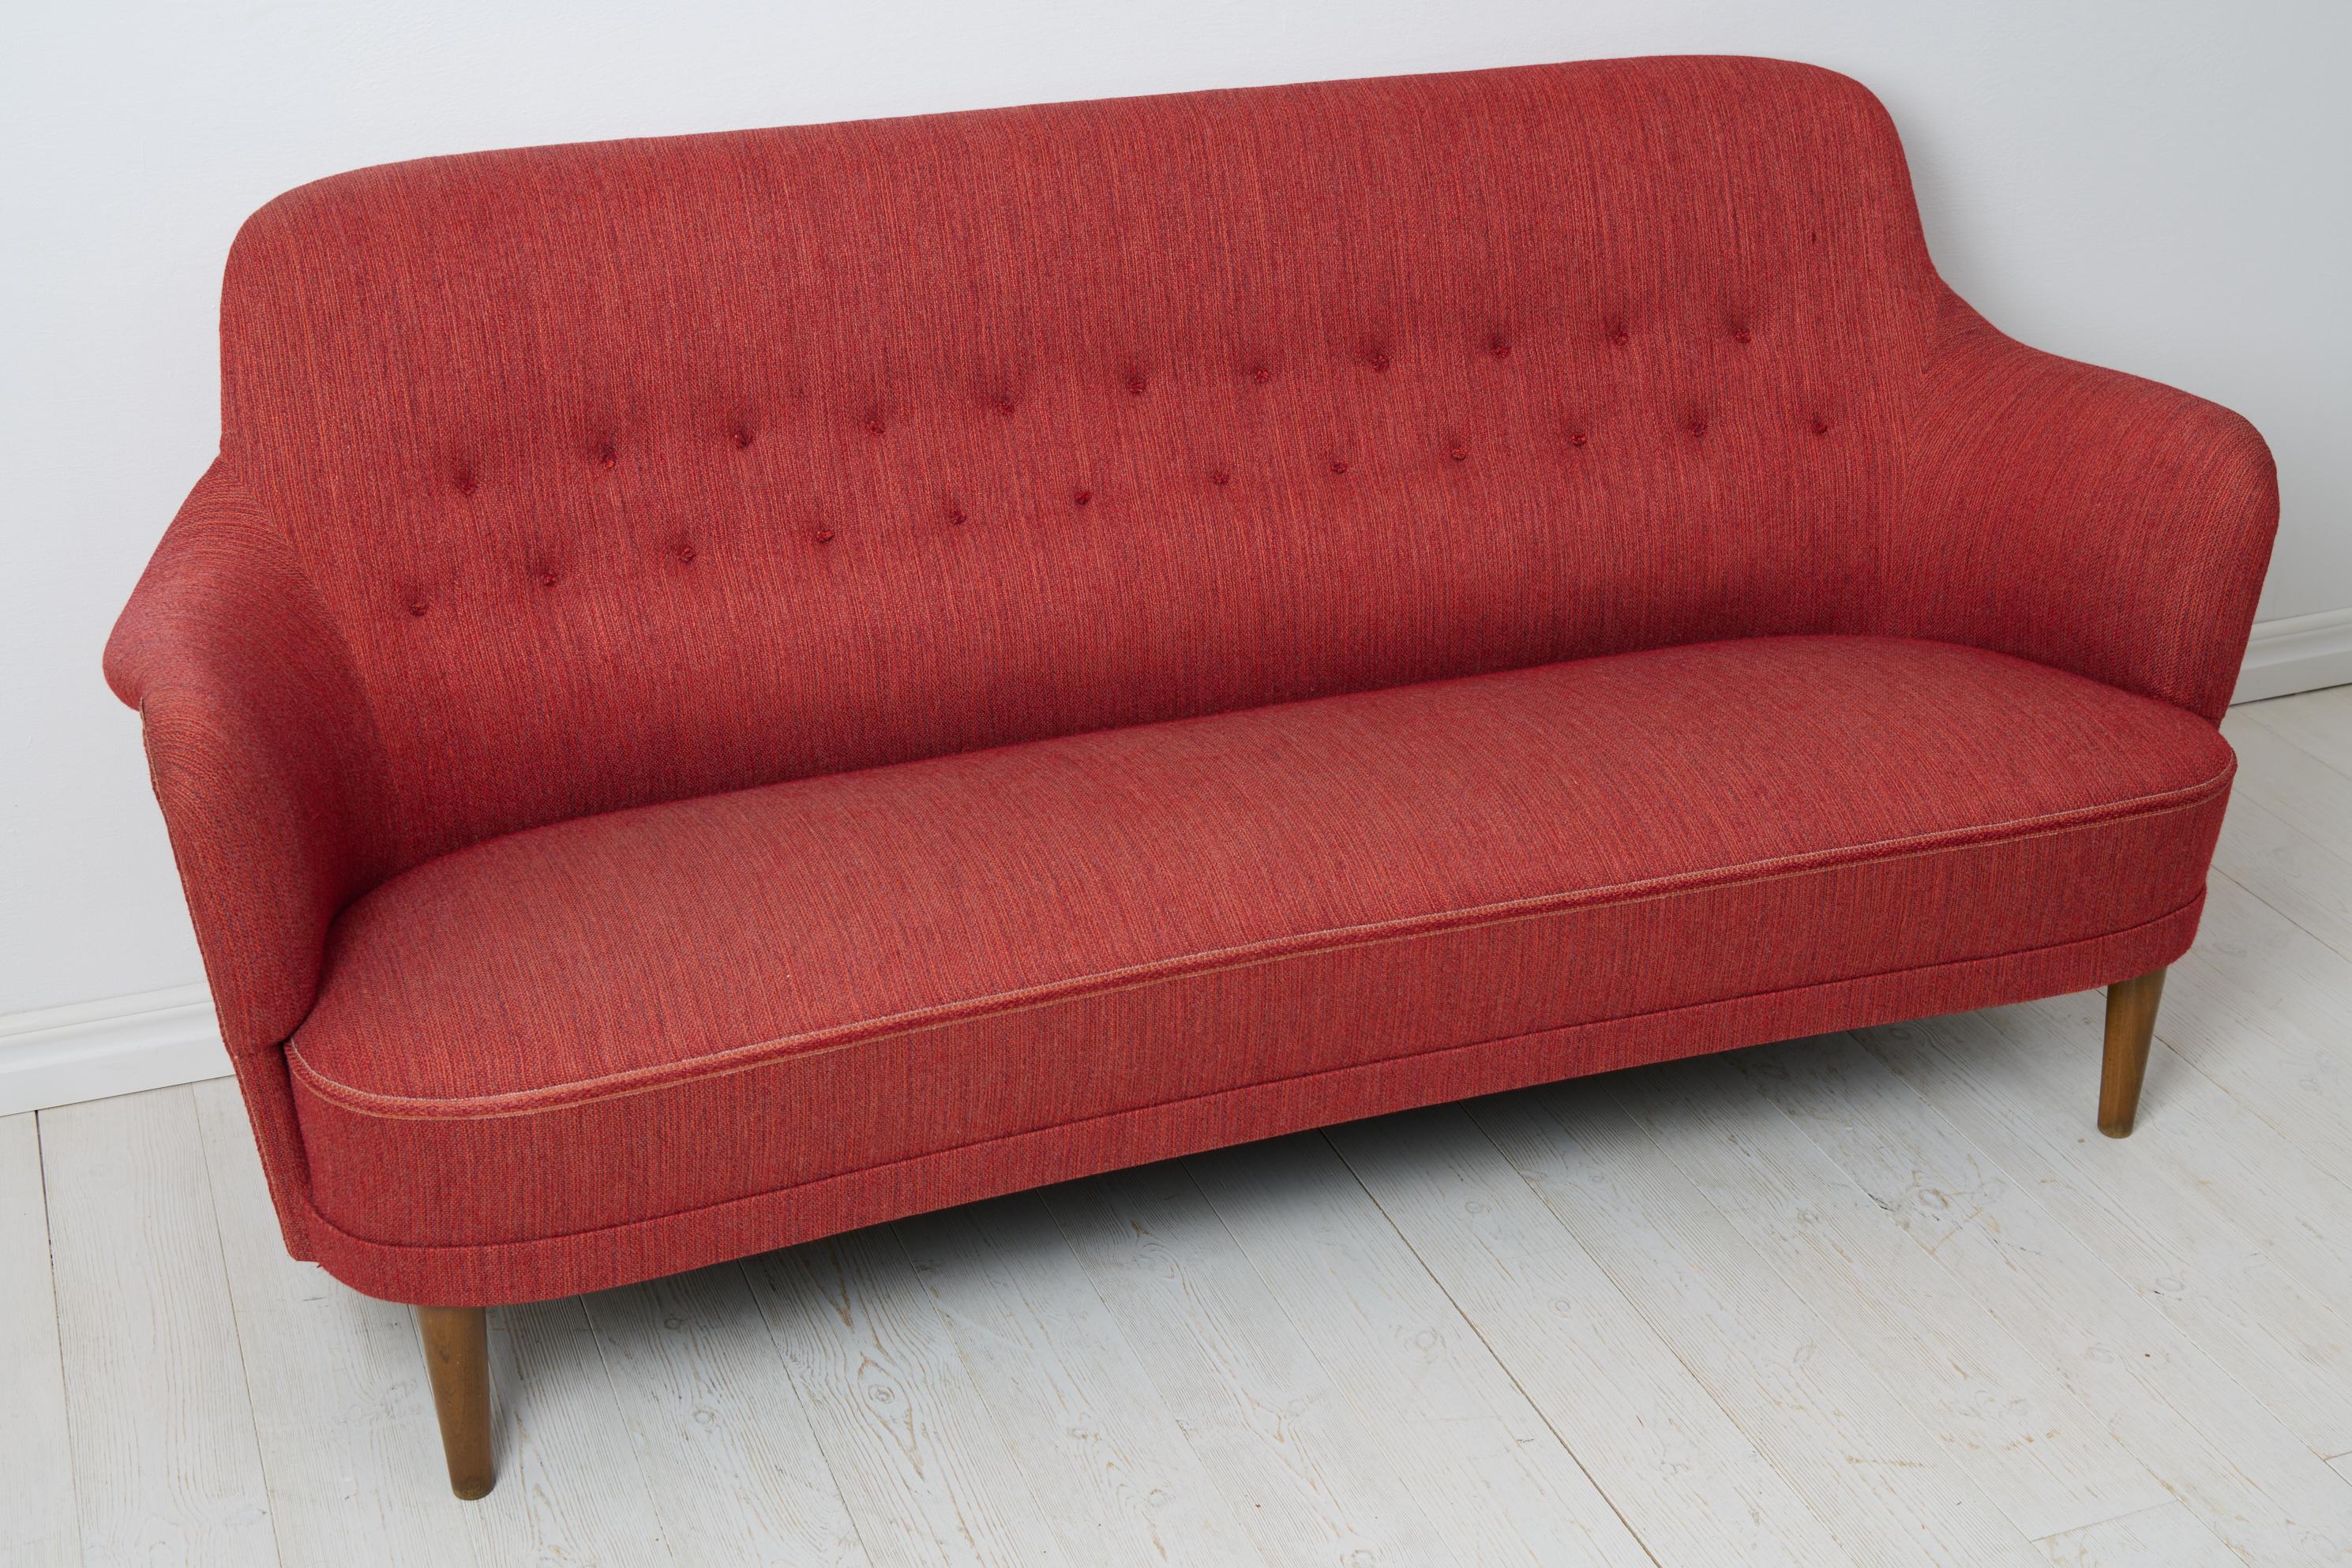 20th Century Scandinavian Swedish Modern Sofa “Samsas” by Carl Malmsten for O.H Sjögren For Sale